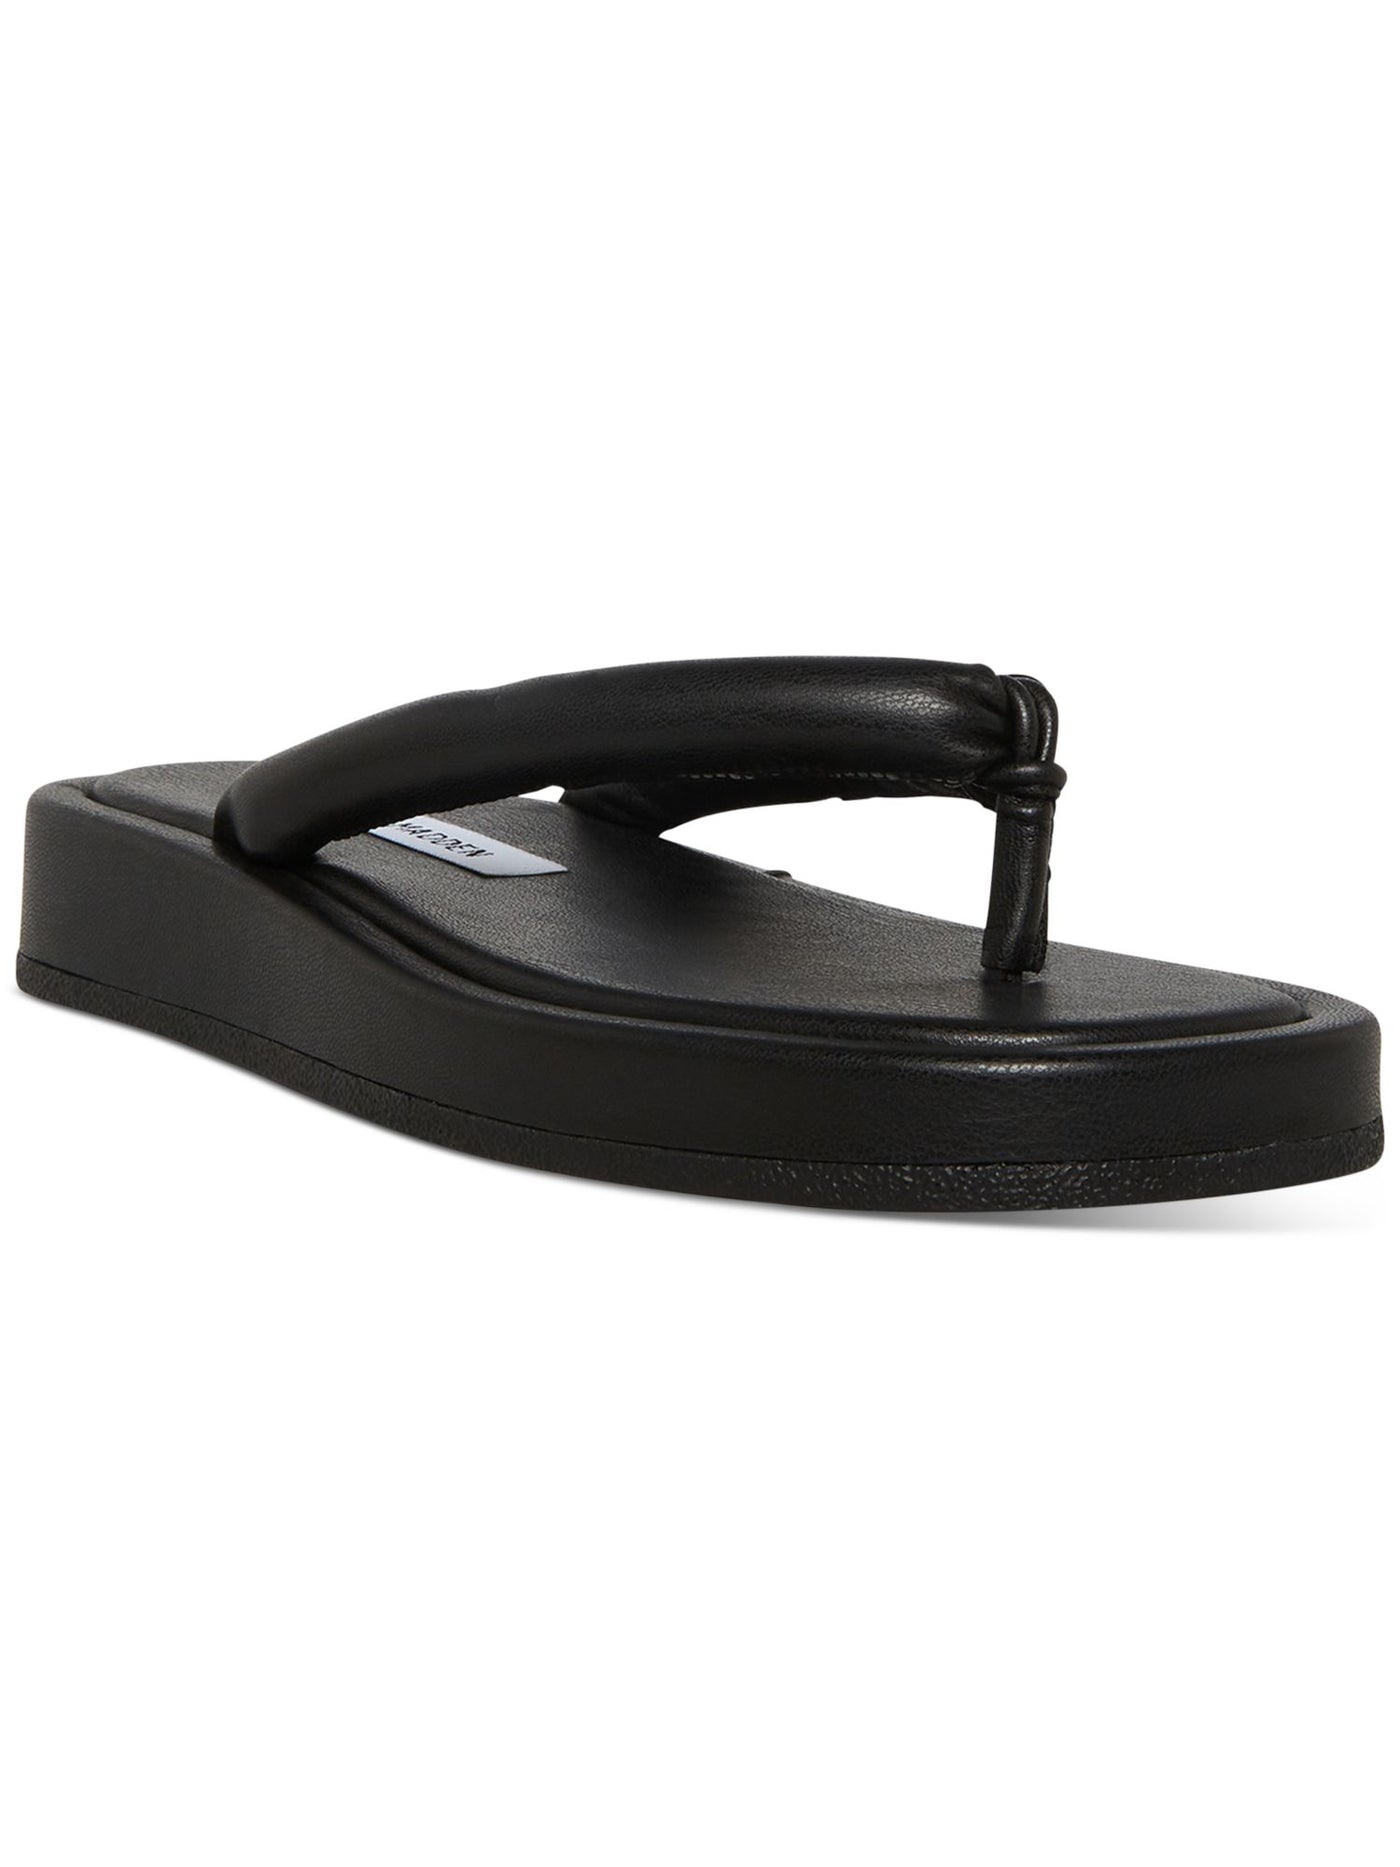 STEVE MADDEN Womens Black Comfort Fango Round Toe Wedge Slip On Thong Sandals Shoes 40